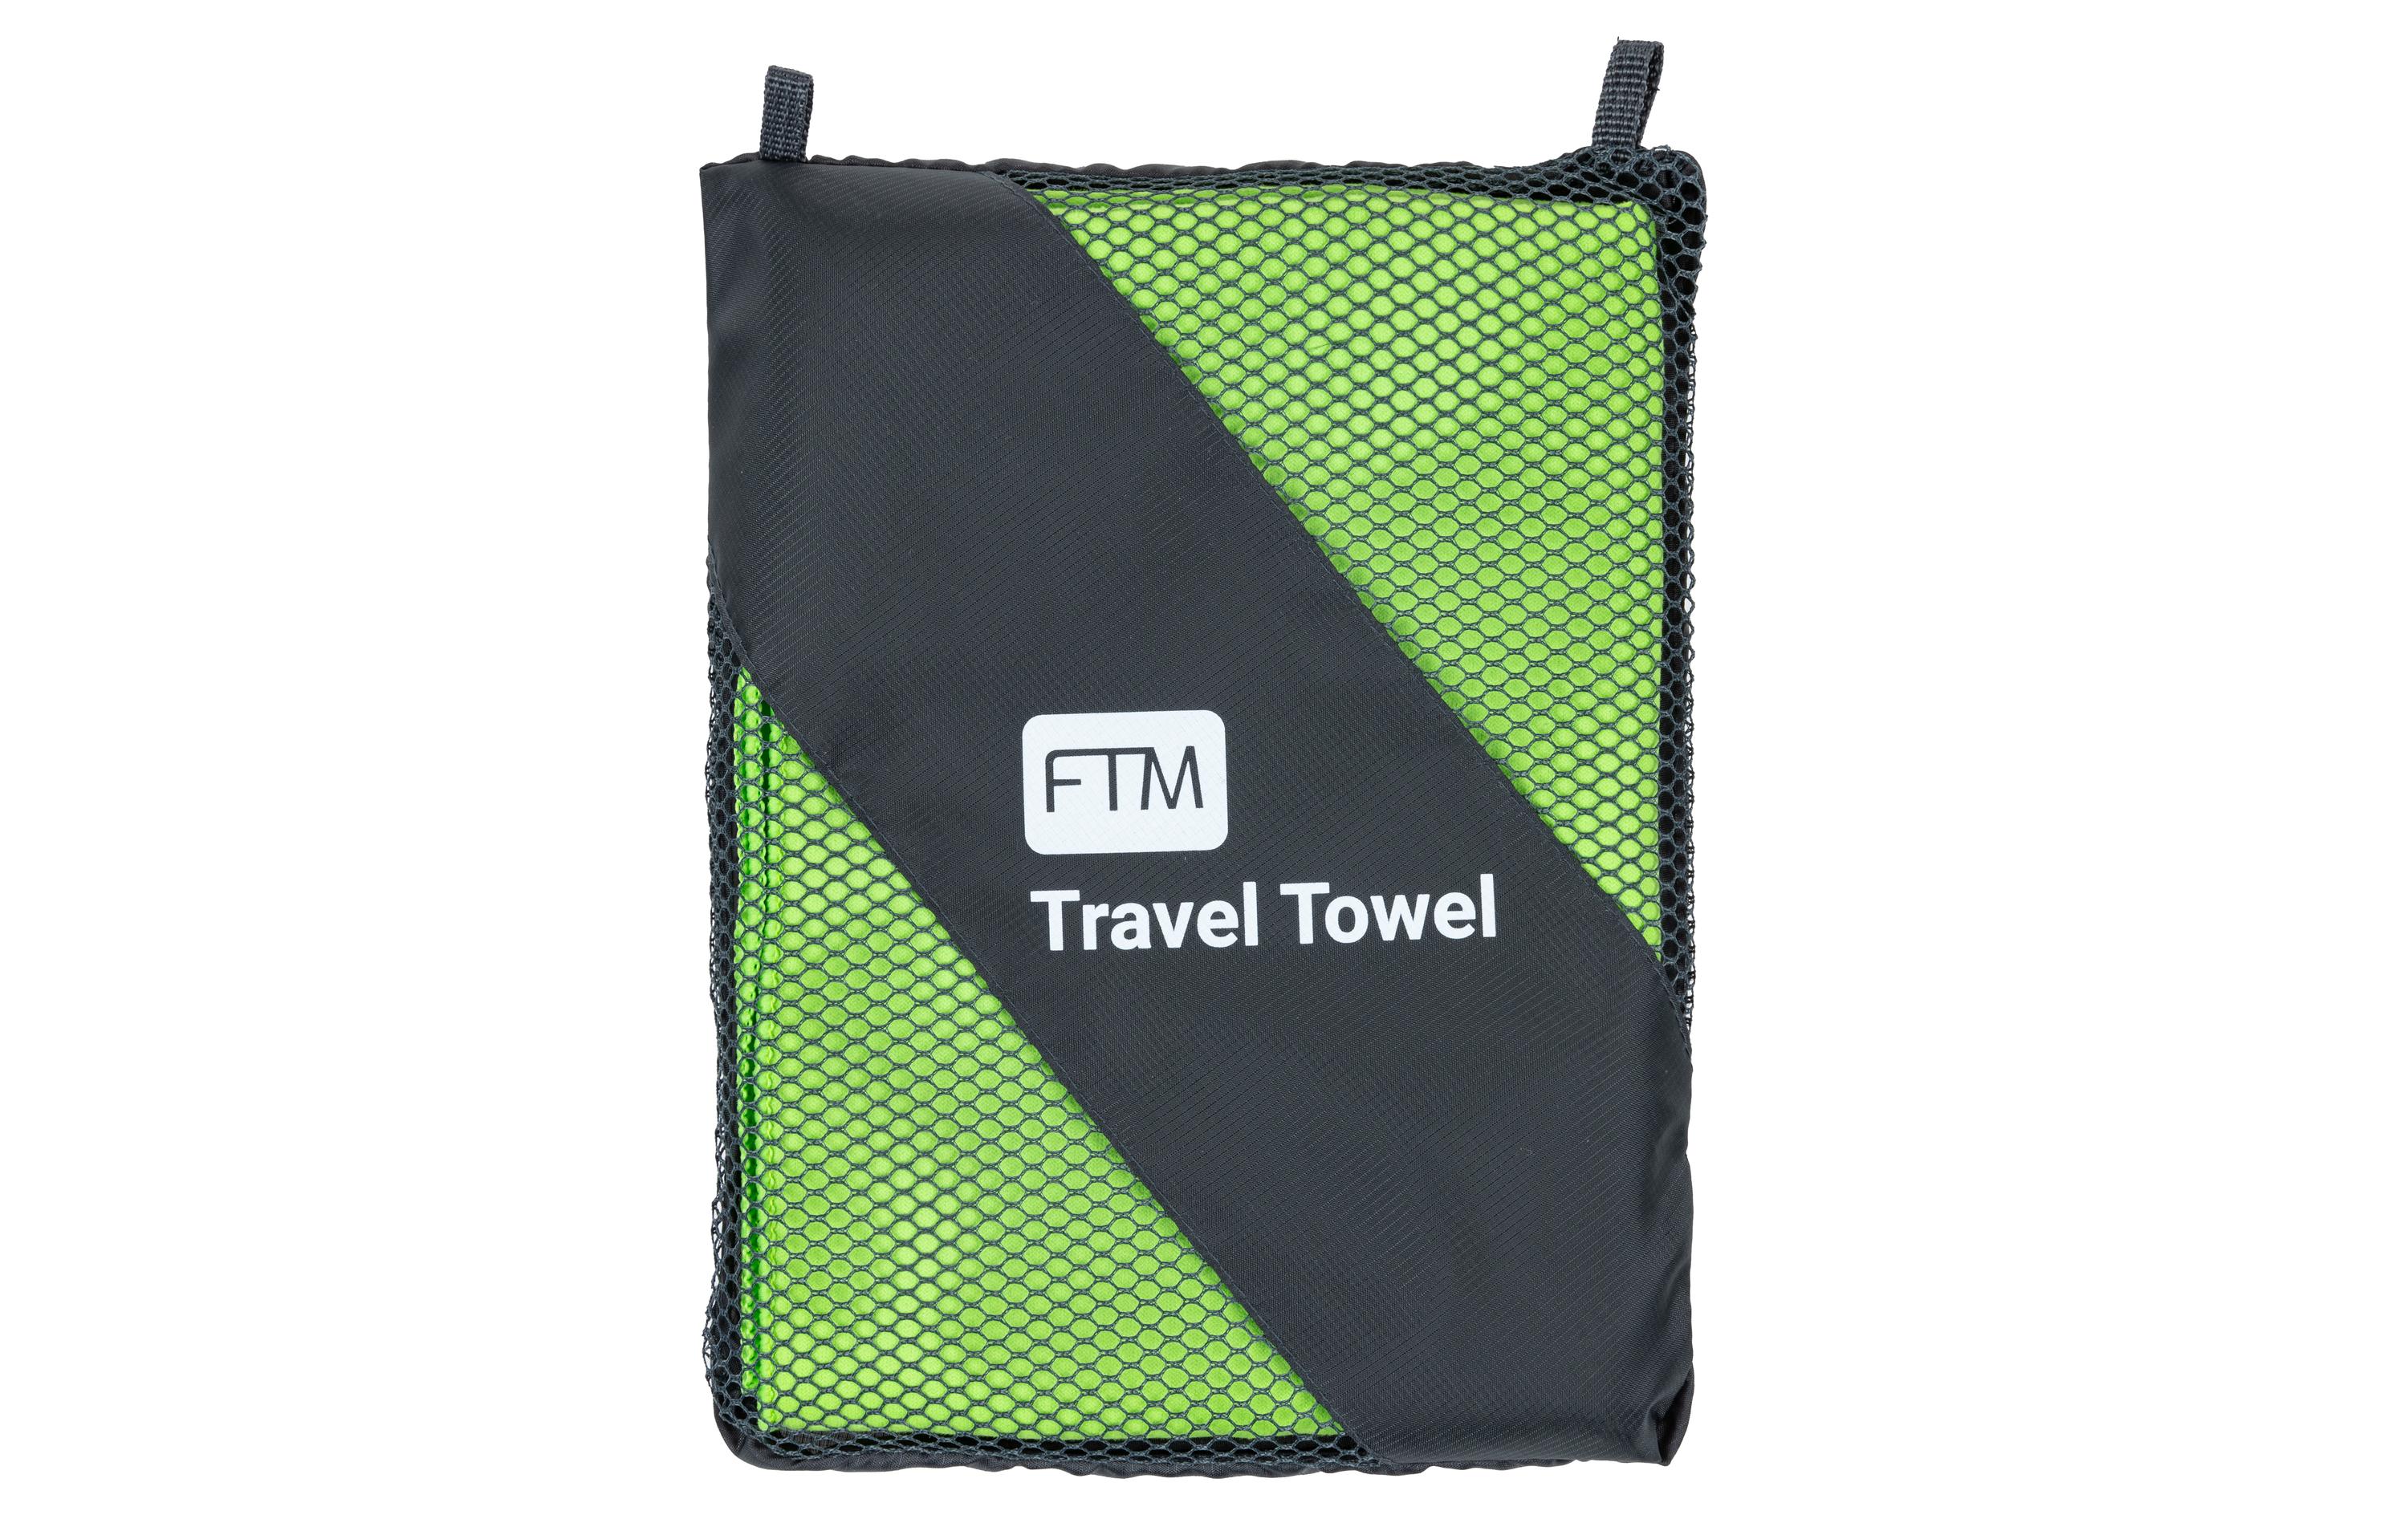 FTM Travel Towel 180 cm x 100 cm